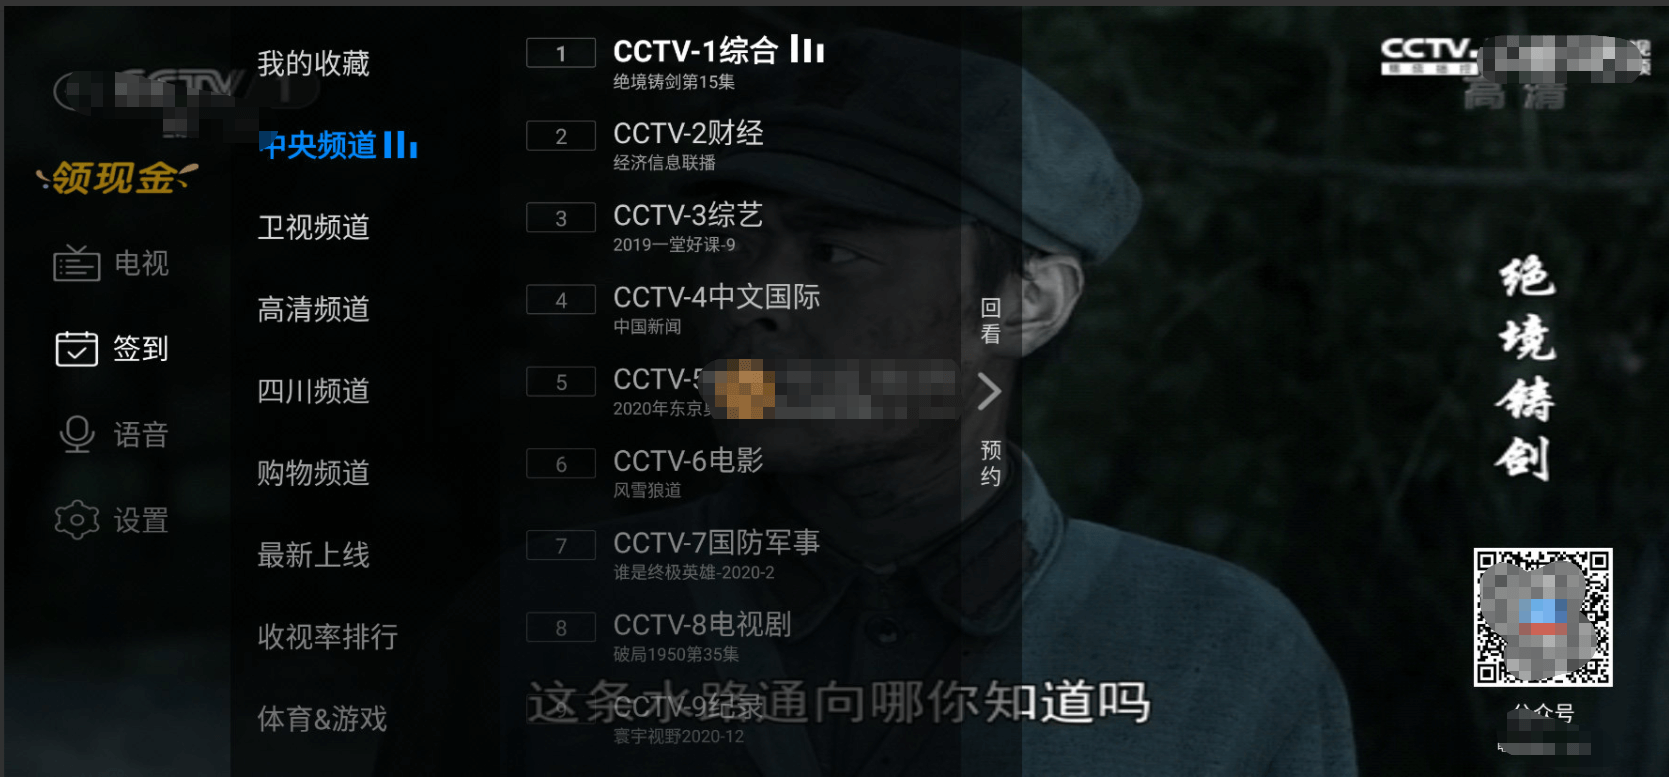 Android 电视家v3.5.11 去广告版-盾给网络dungei.cc-dungei.com域名已更换